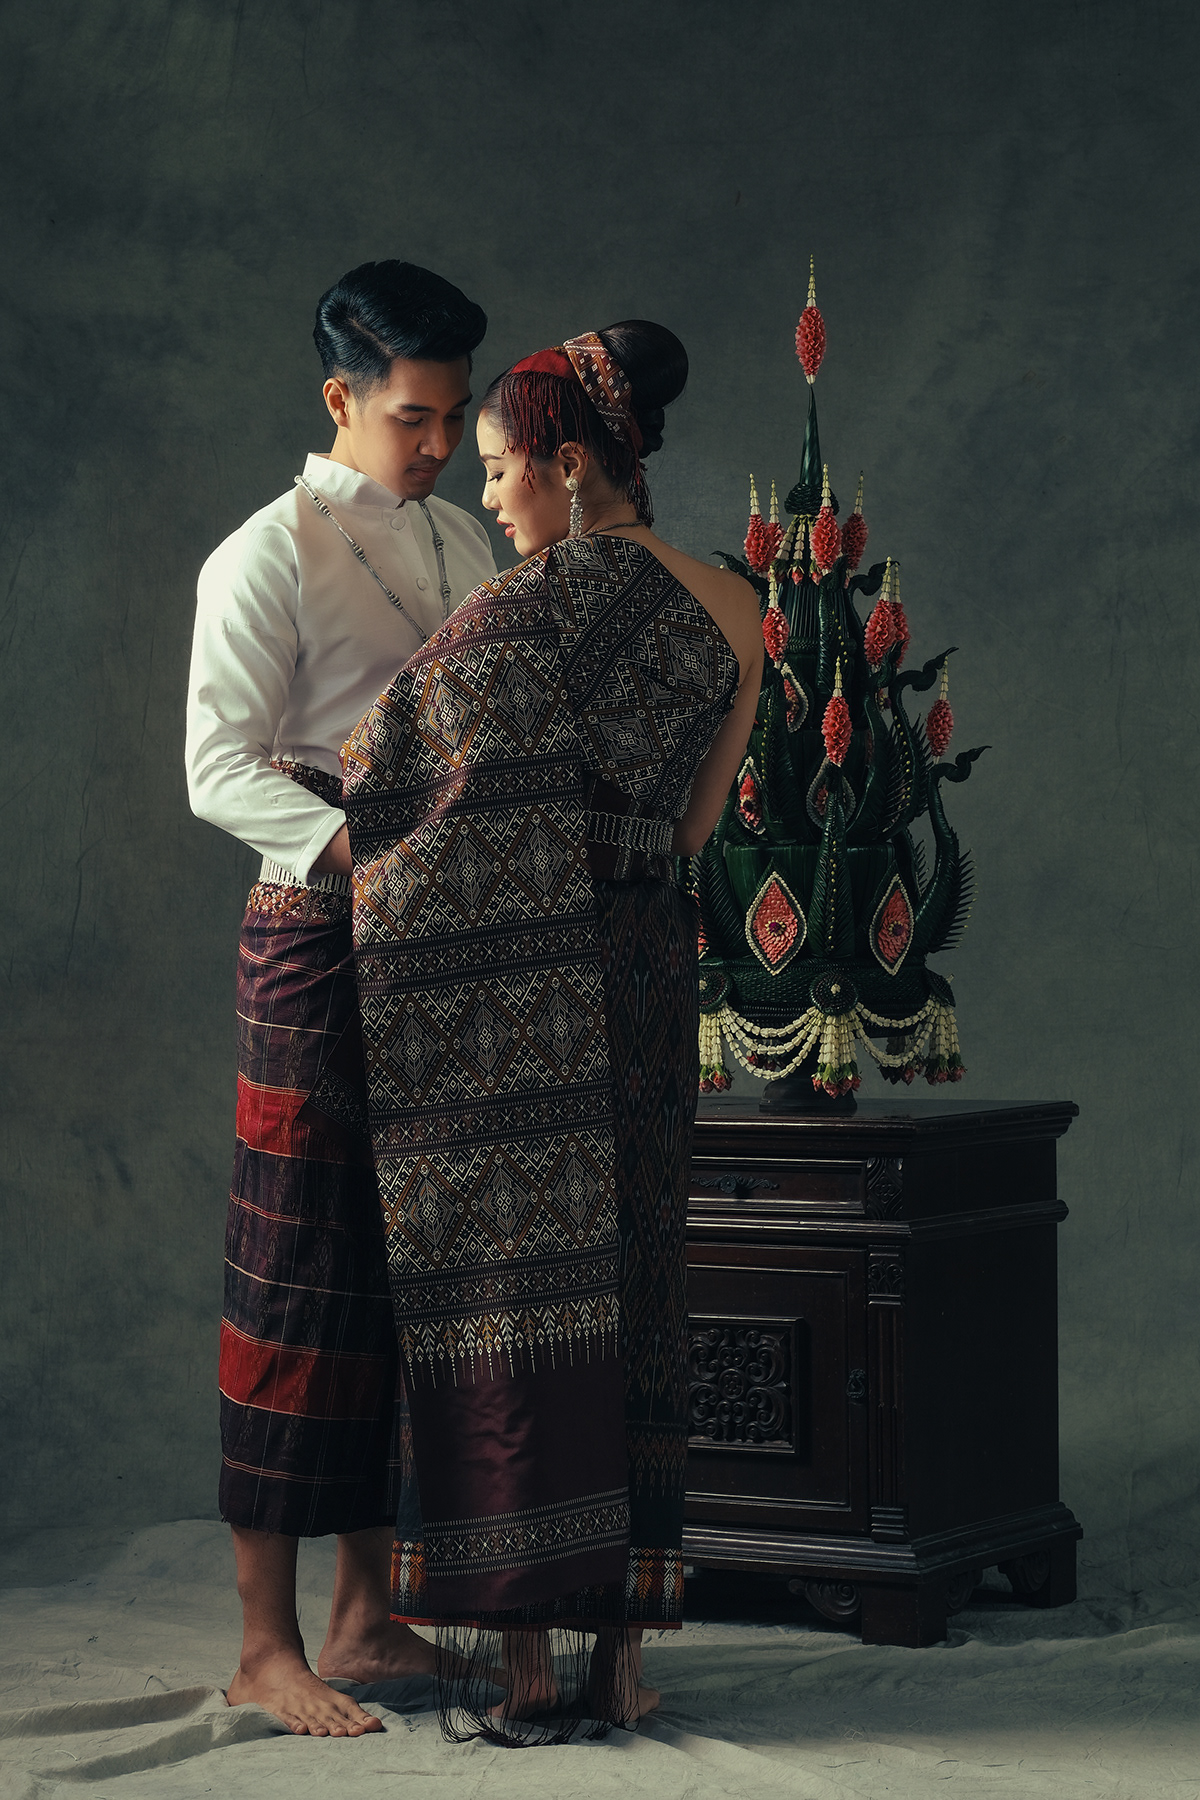 David Ryo Photographer - Esan-Thai traditional wedding costumes by ...